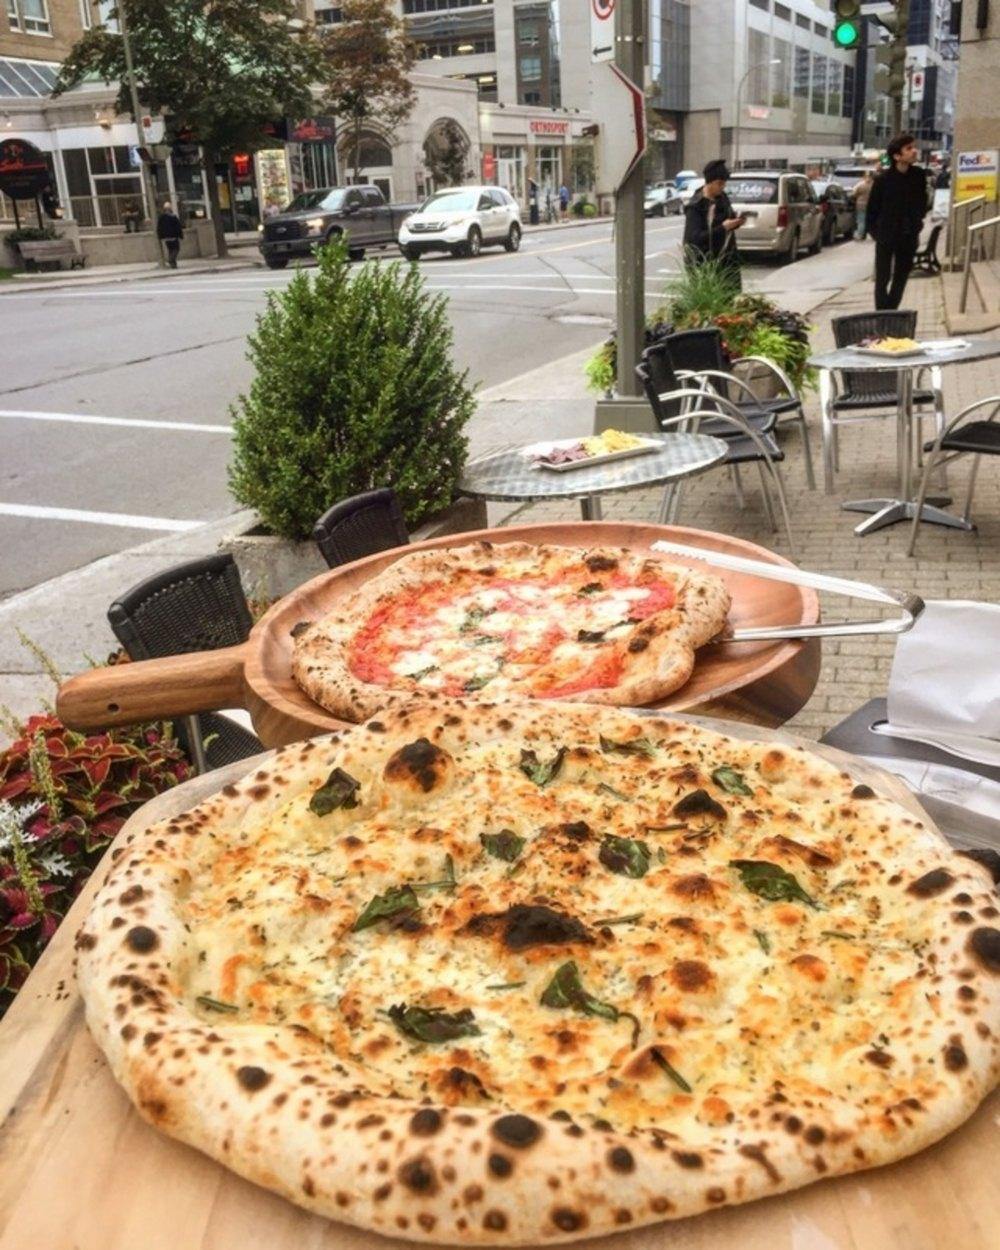 Taste Italy - Pizzaioli Traiteur Catering - Montreal-East, Montreal - Pizza Cuisine Restaurant